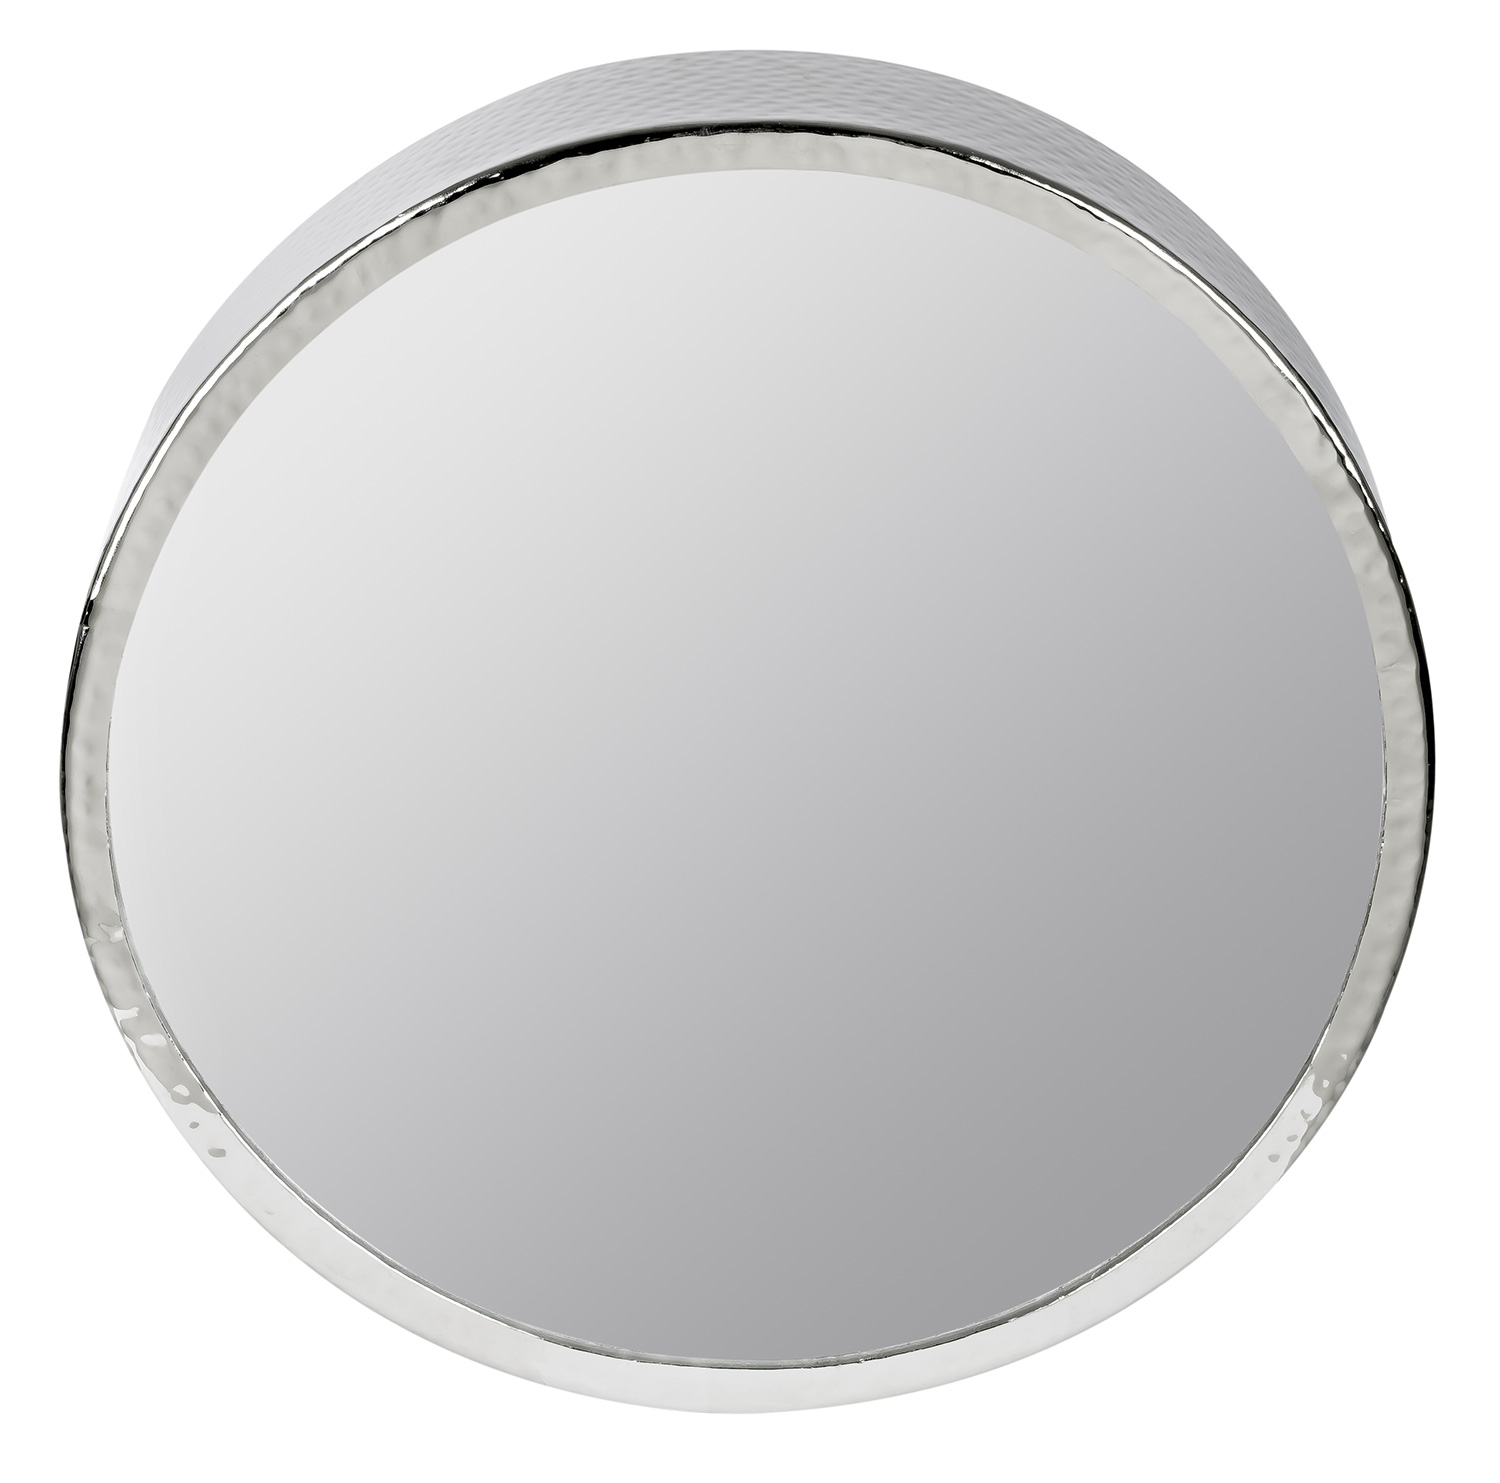 Cooper Classics Benedetta Mirror - Shiny Nickel